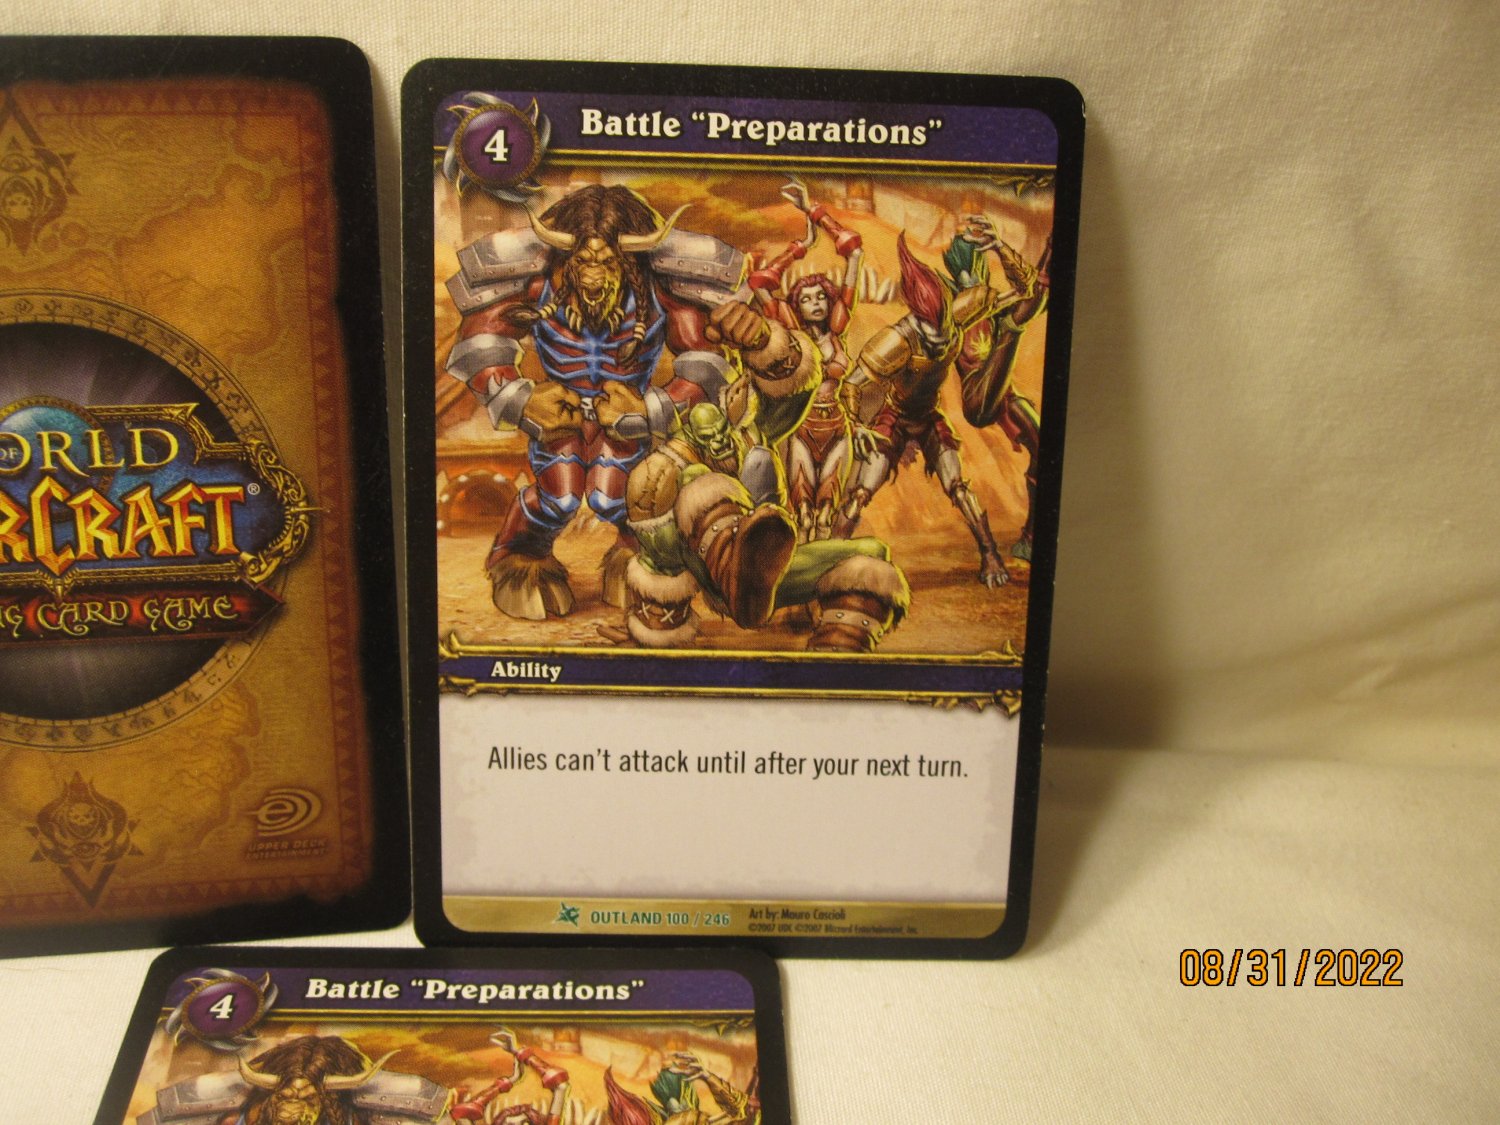 2007 World of Warcraft TCG Outland card #100/246: Battle "Preparations"